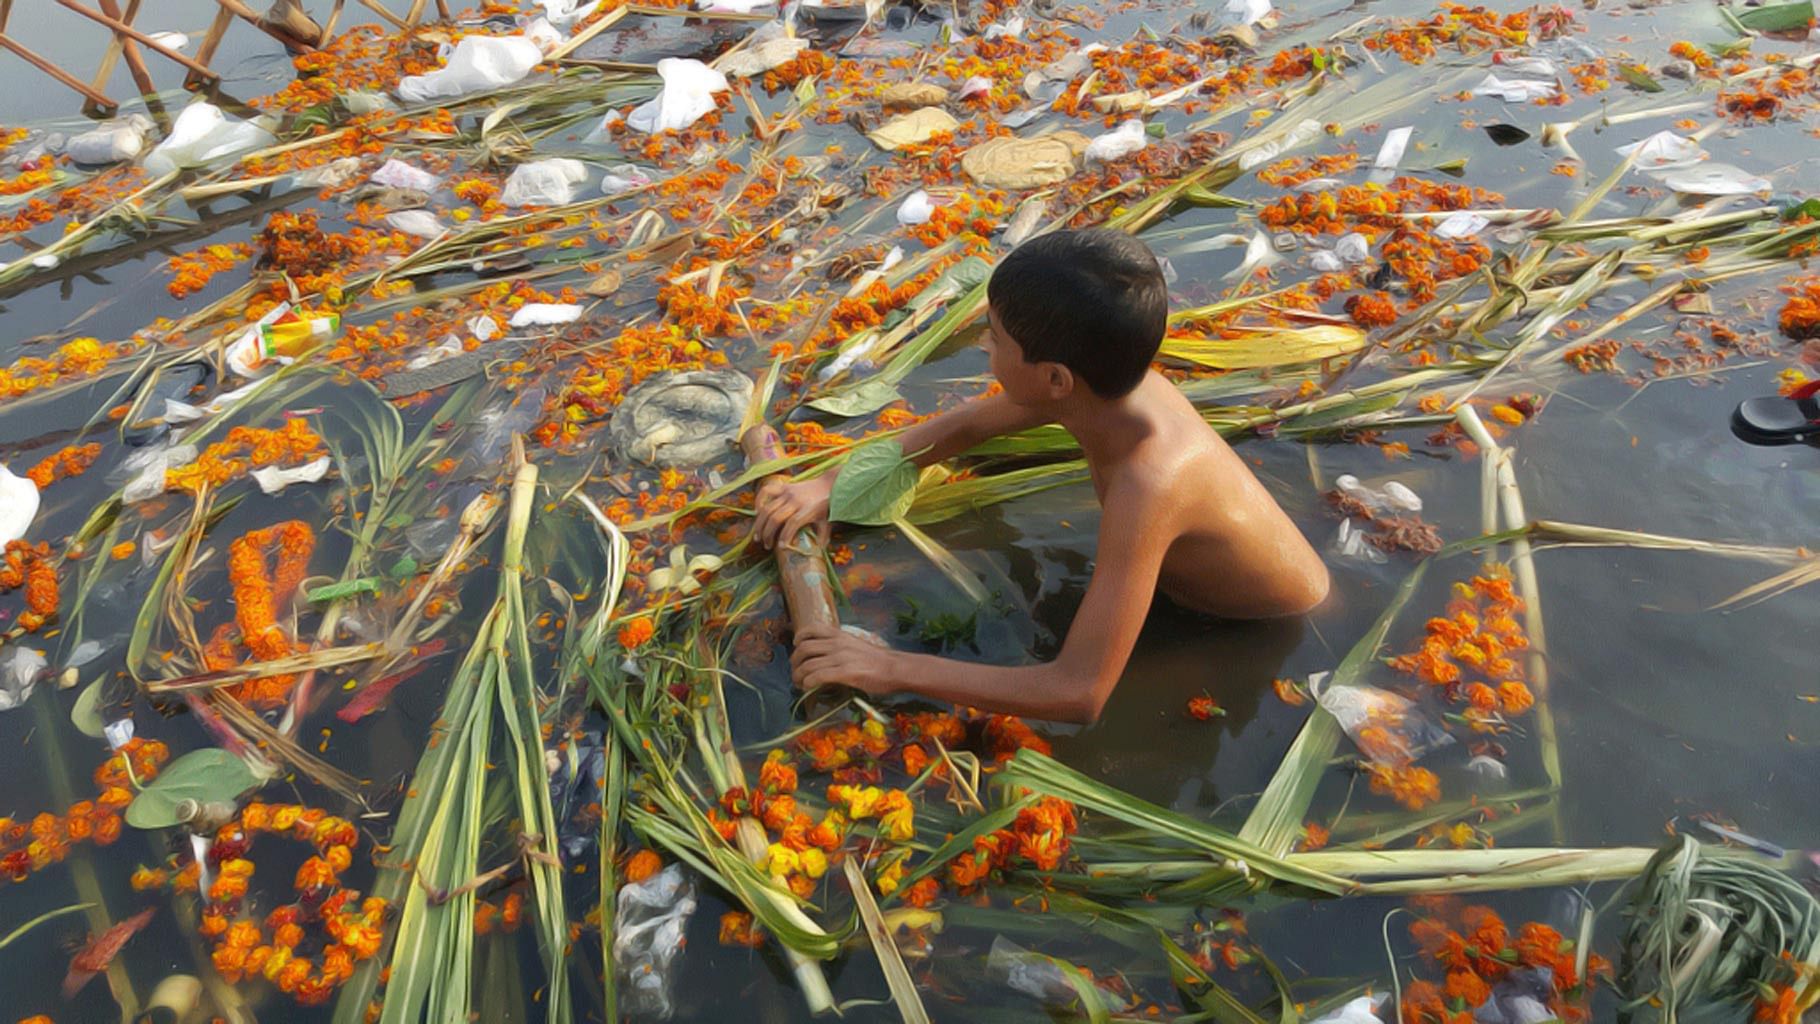 A boy swims through a polluted river. (Photo: The Quint)